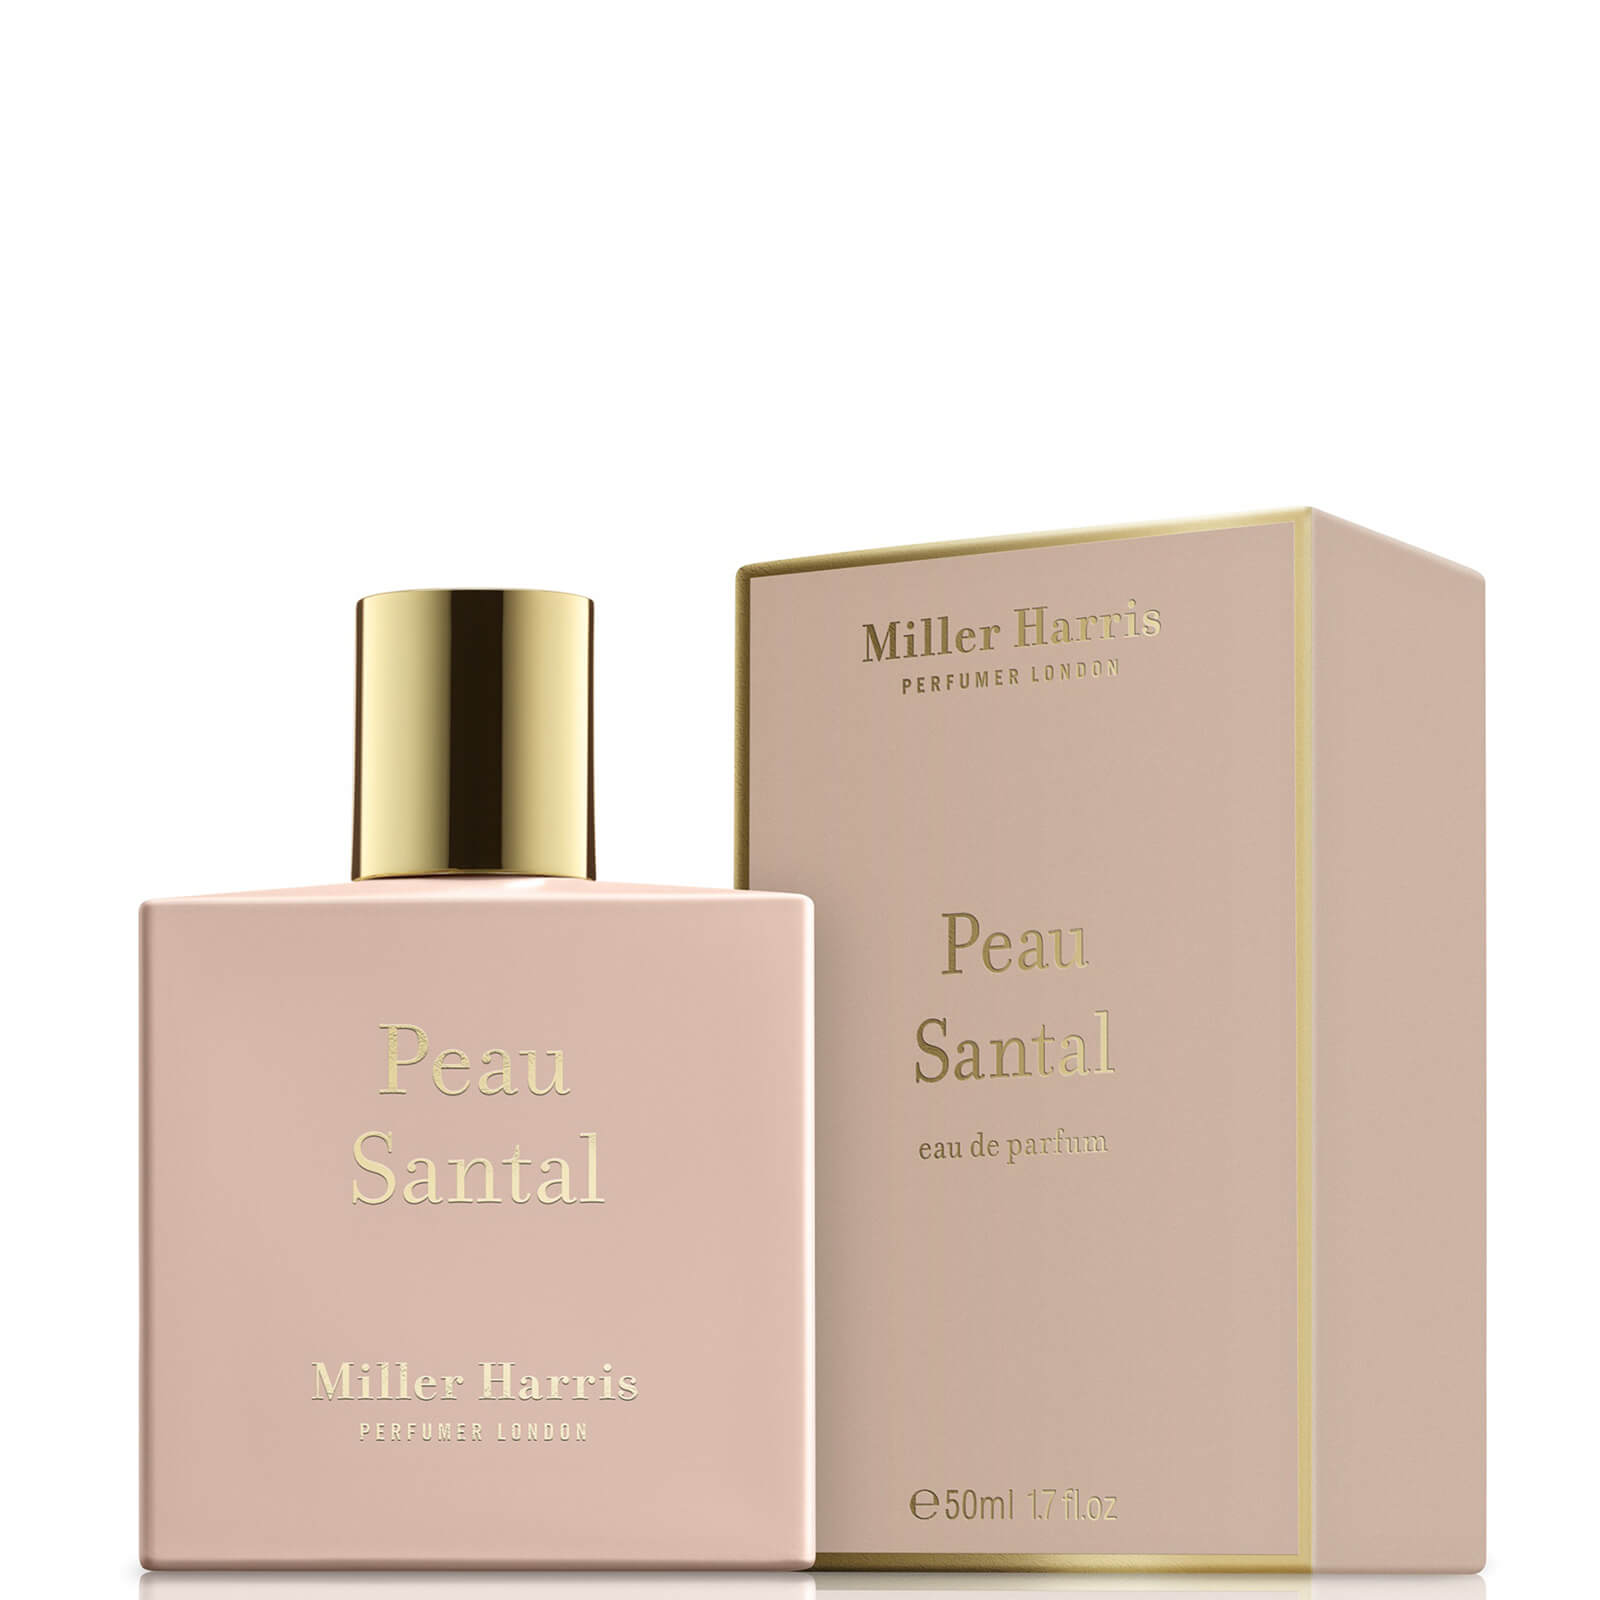 Miller Harris Peau Santal Eau De Parfum 50ml In Pink